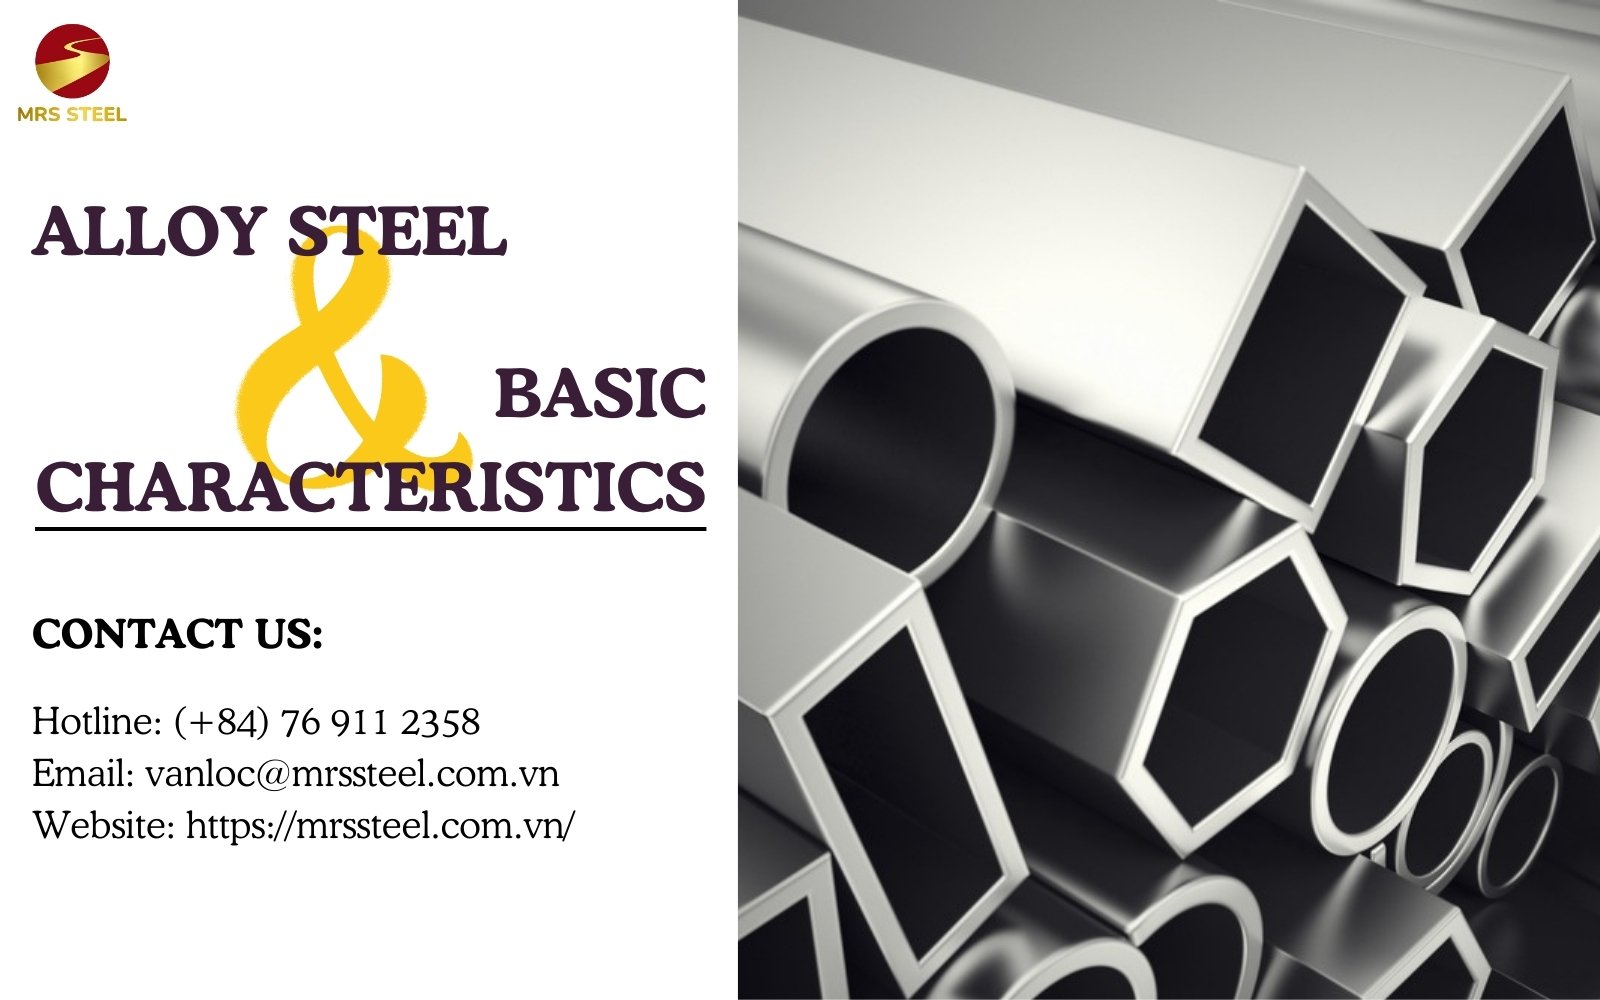 Alloy Steel and Basic Characteristics